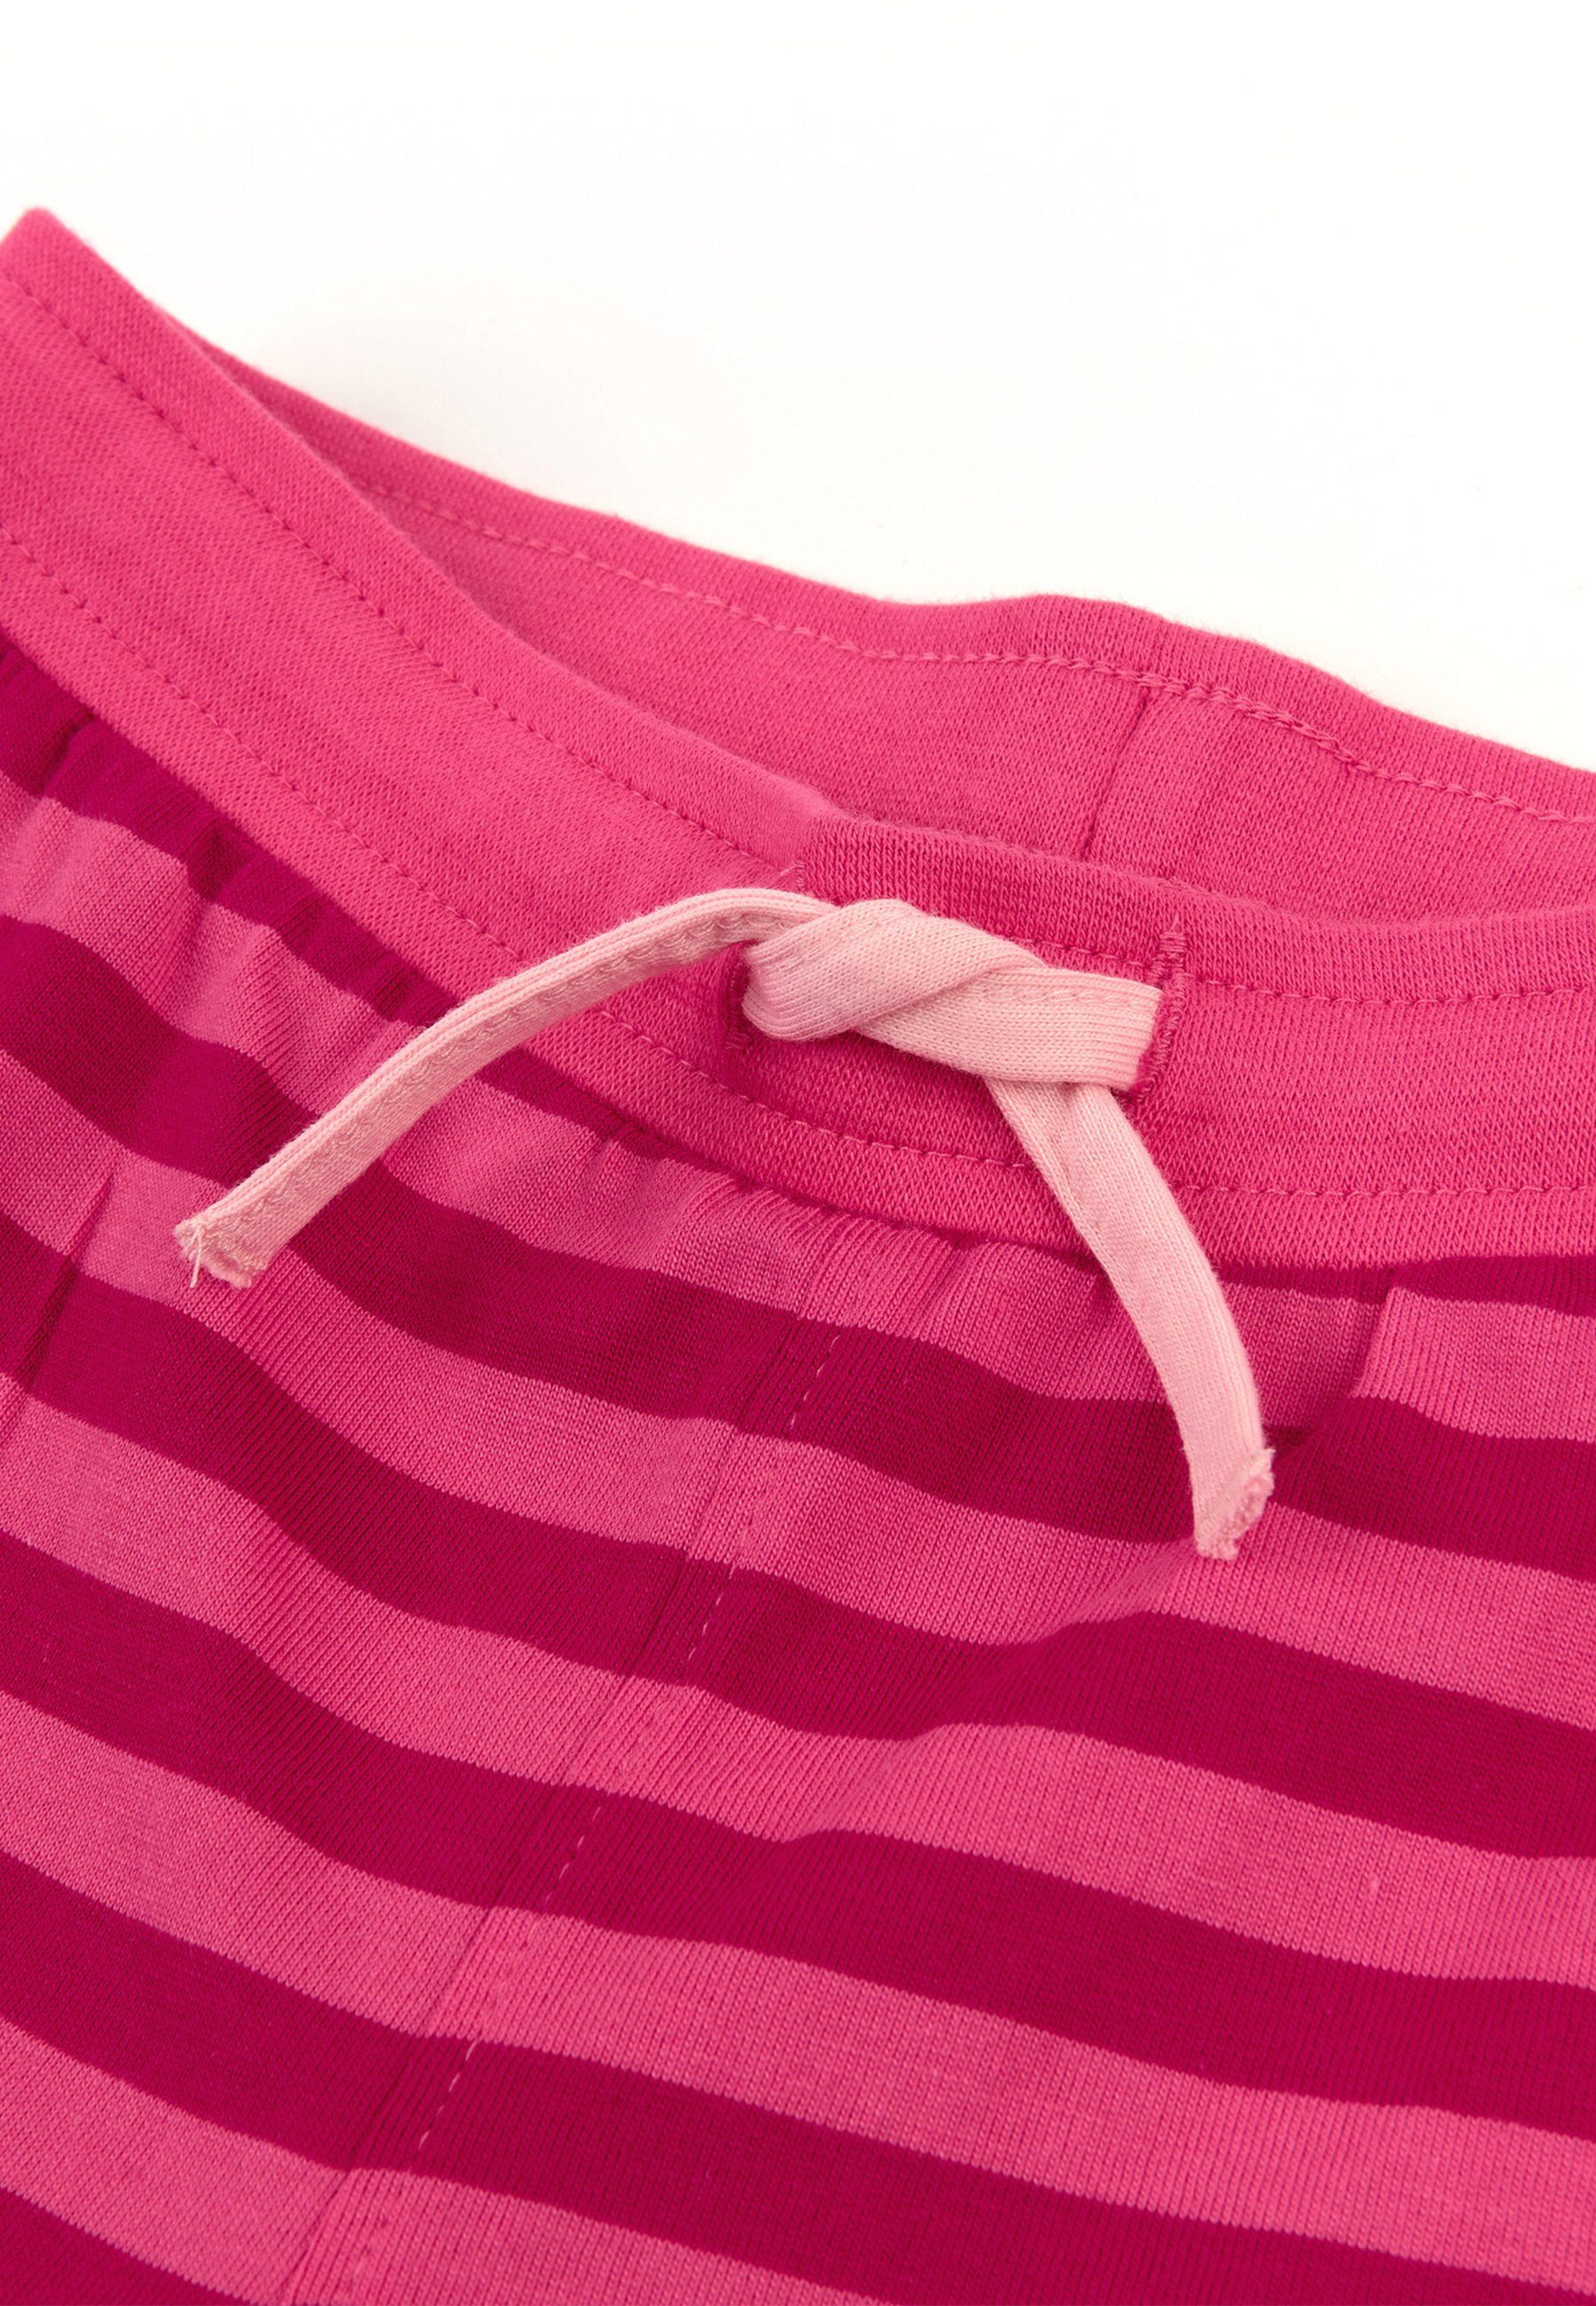 Pyjama tlg) Nachtwäsche Kinder pink Pyjama Sigikid (2